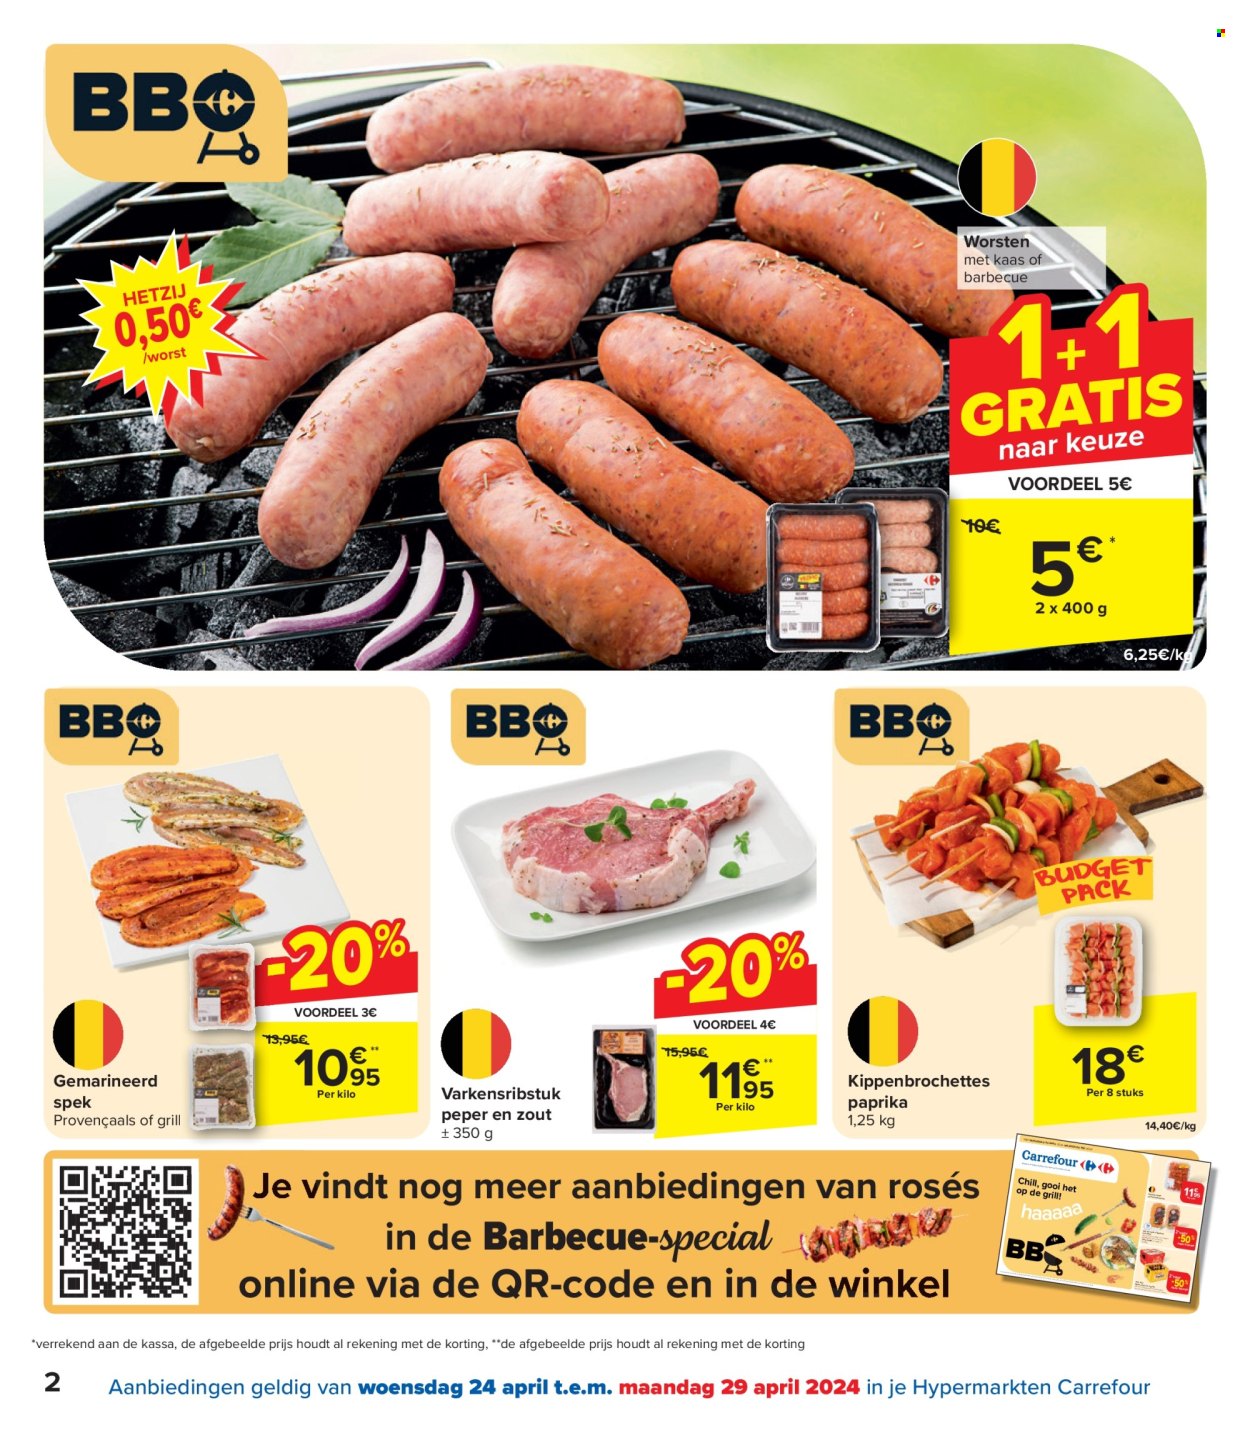 thumbnail - Catalogue Carrefour hypermarkt - 24/04/2024 - 06/05/2024 - Produits soldés - barbecue, grill. Page 2.